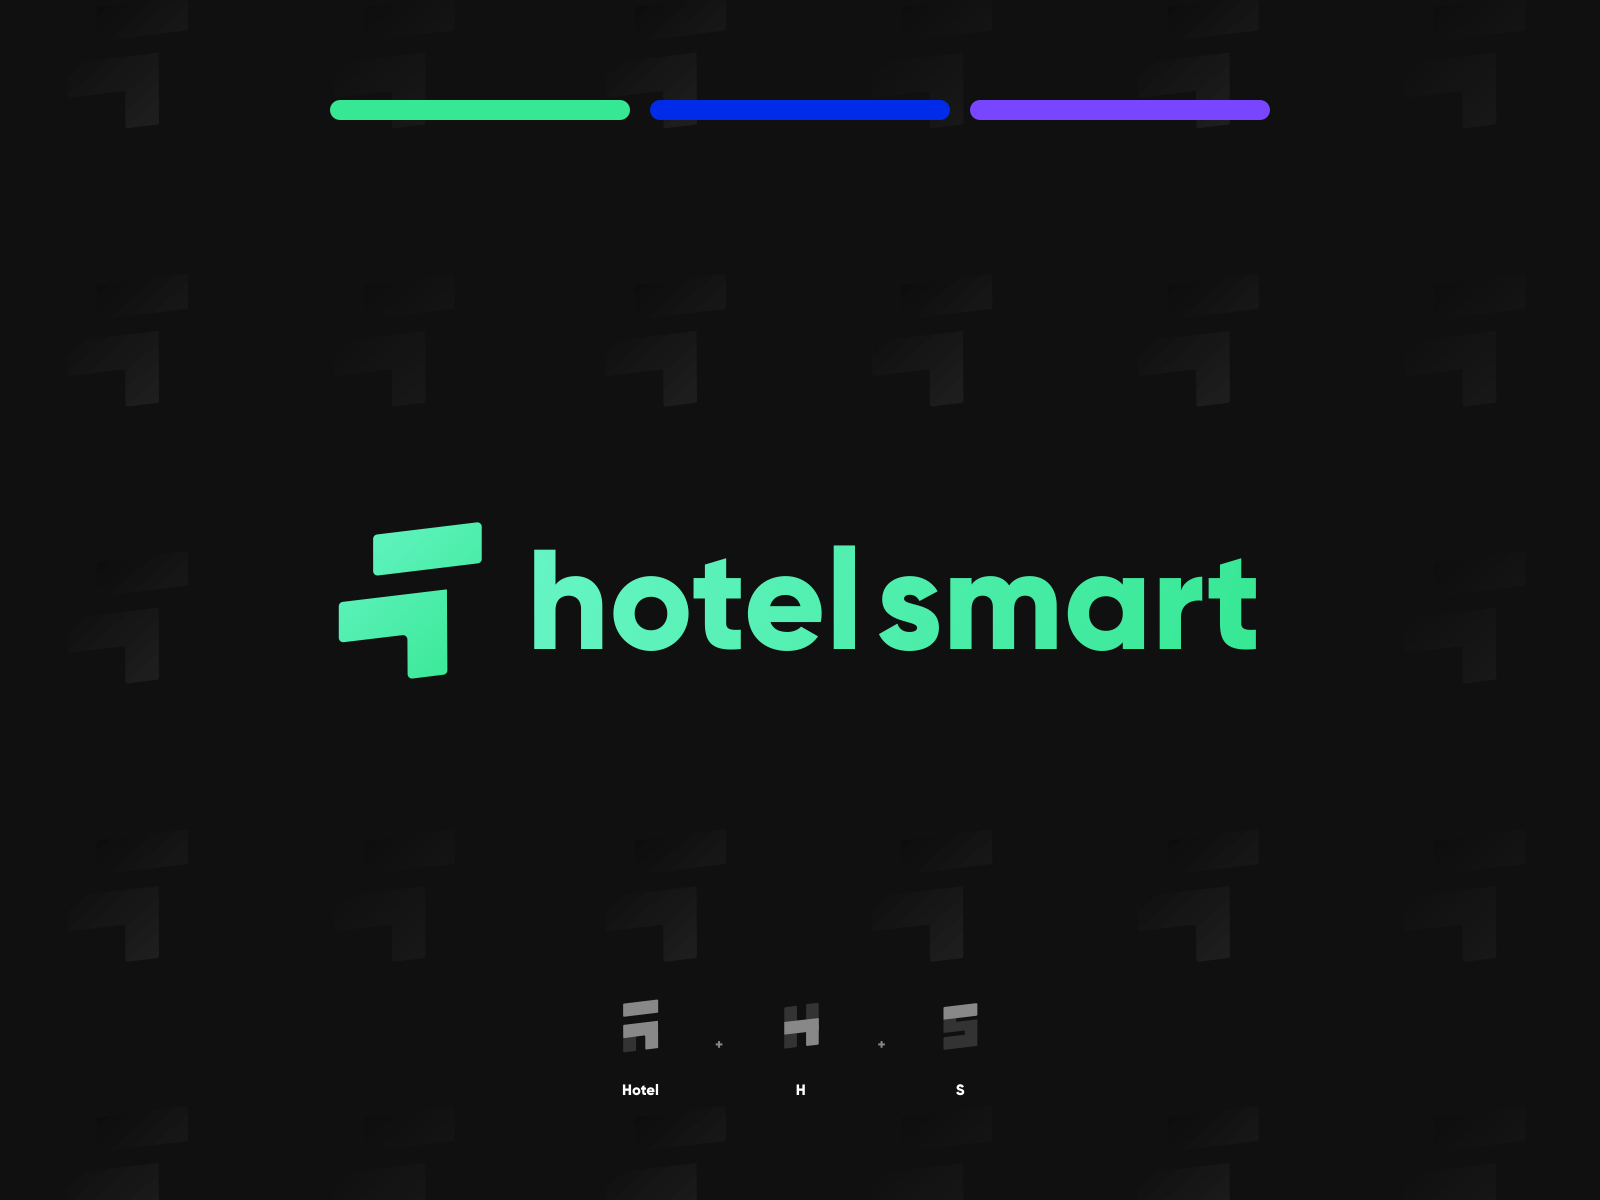 Hotelsmart — Branding by Lucas Holm on Dribbble